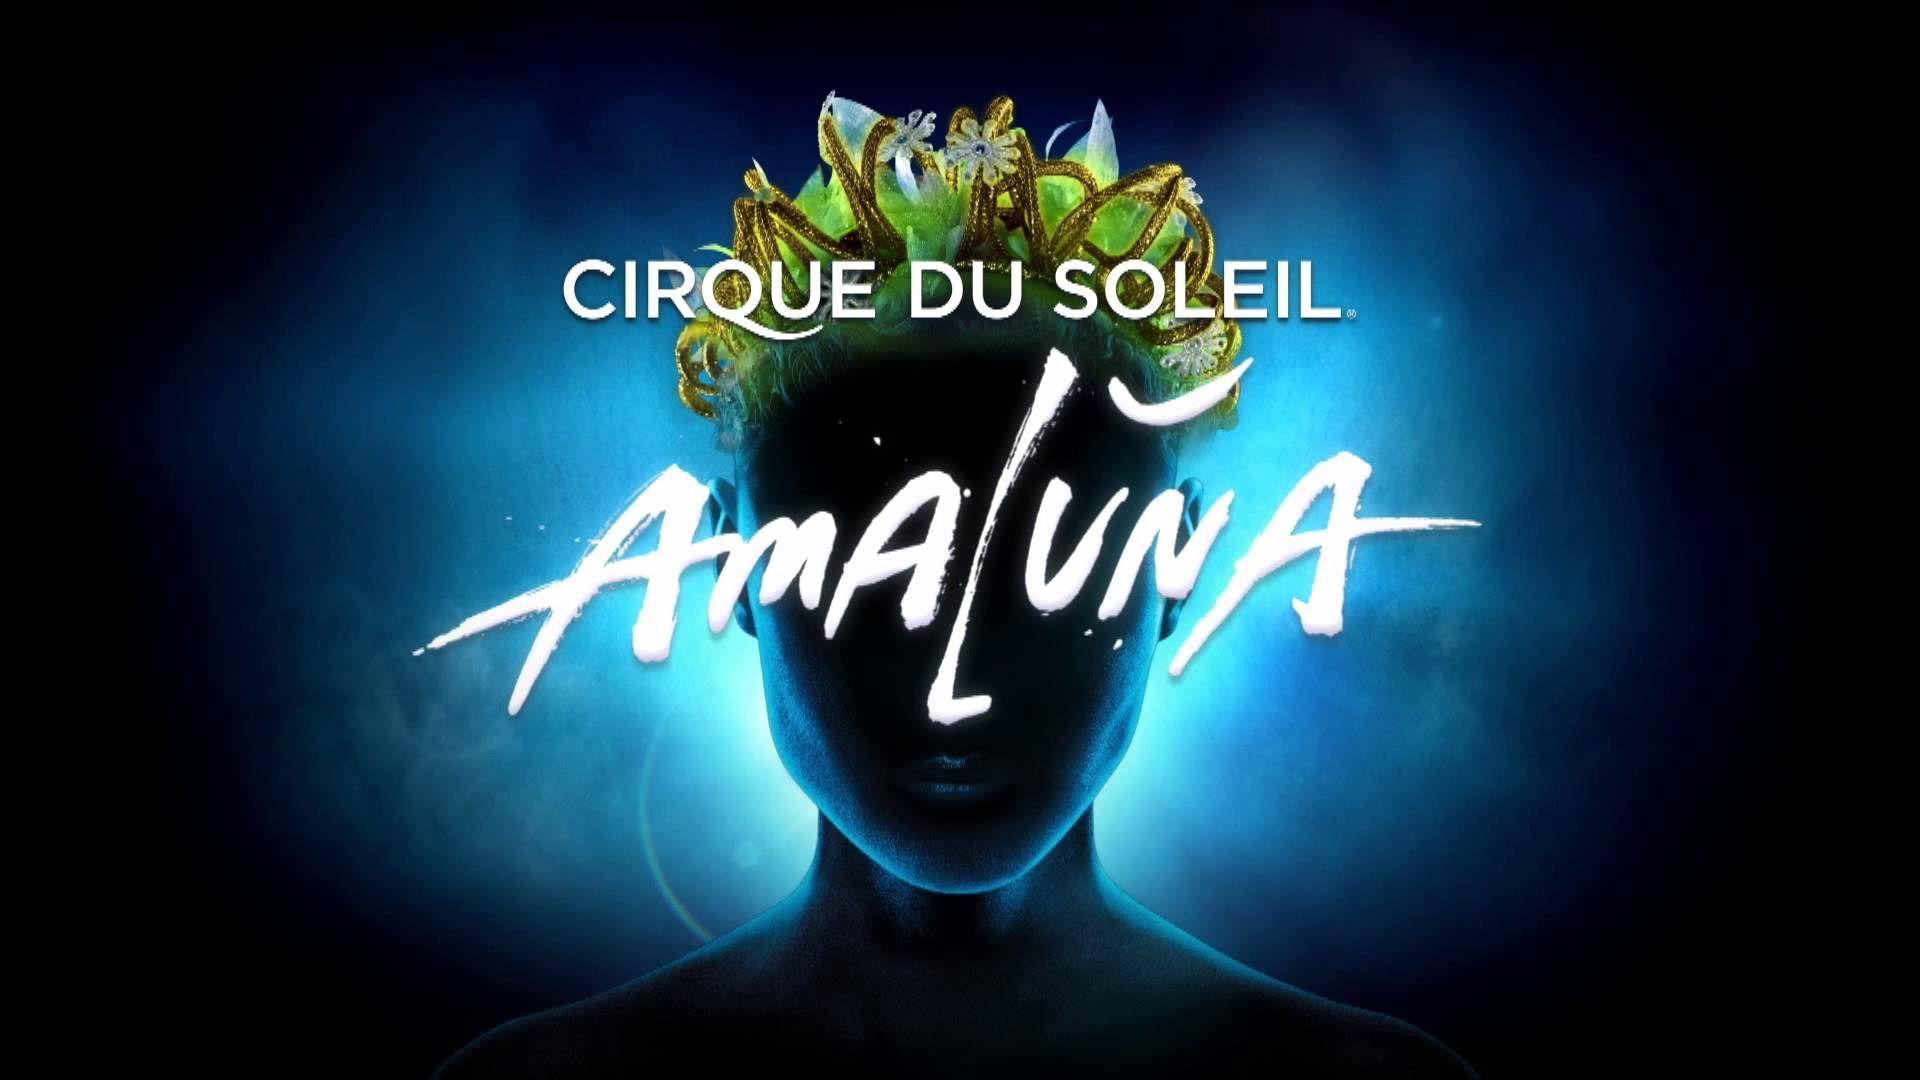 Amaluna: Cirque du Soleil's Invitation to a Mysterious Island